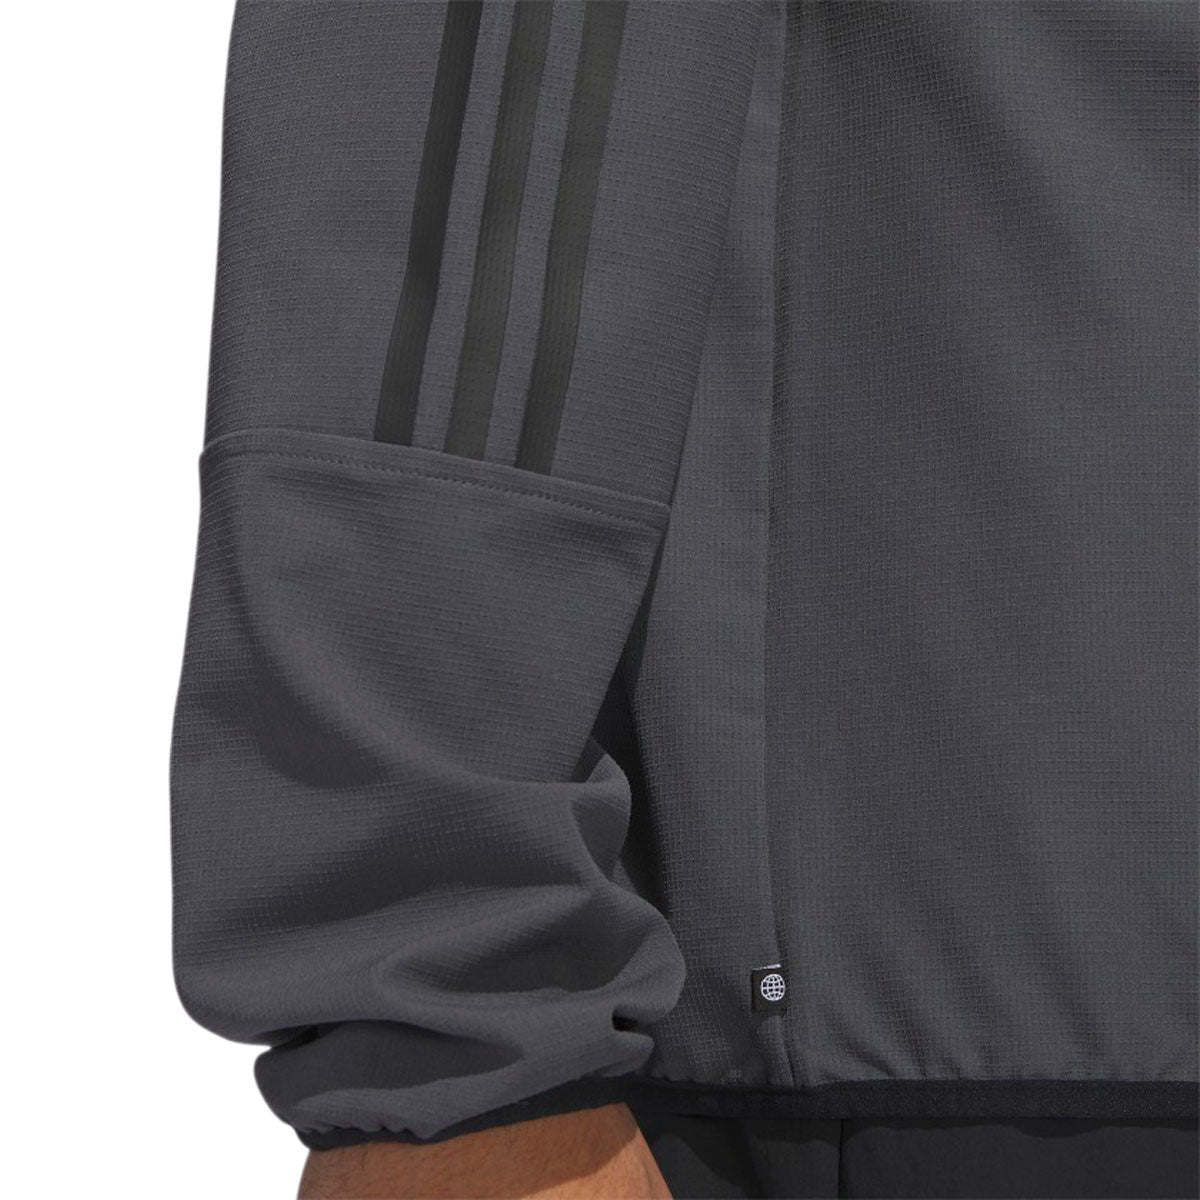 Adidas x Pop Thermal Long Sleeve Shirt - Grey/Black image 3